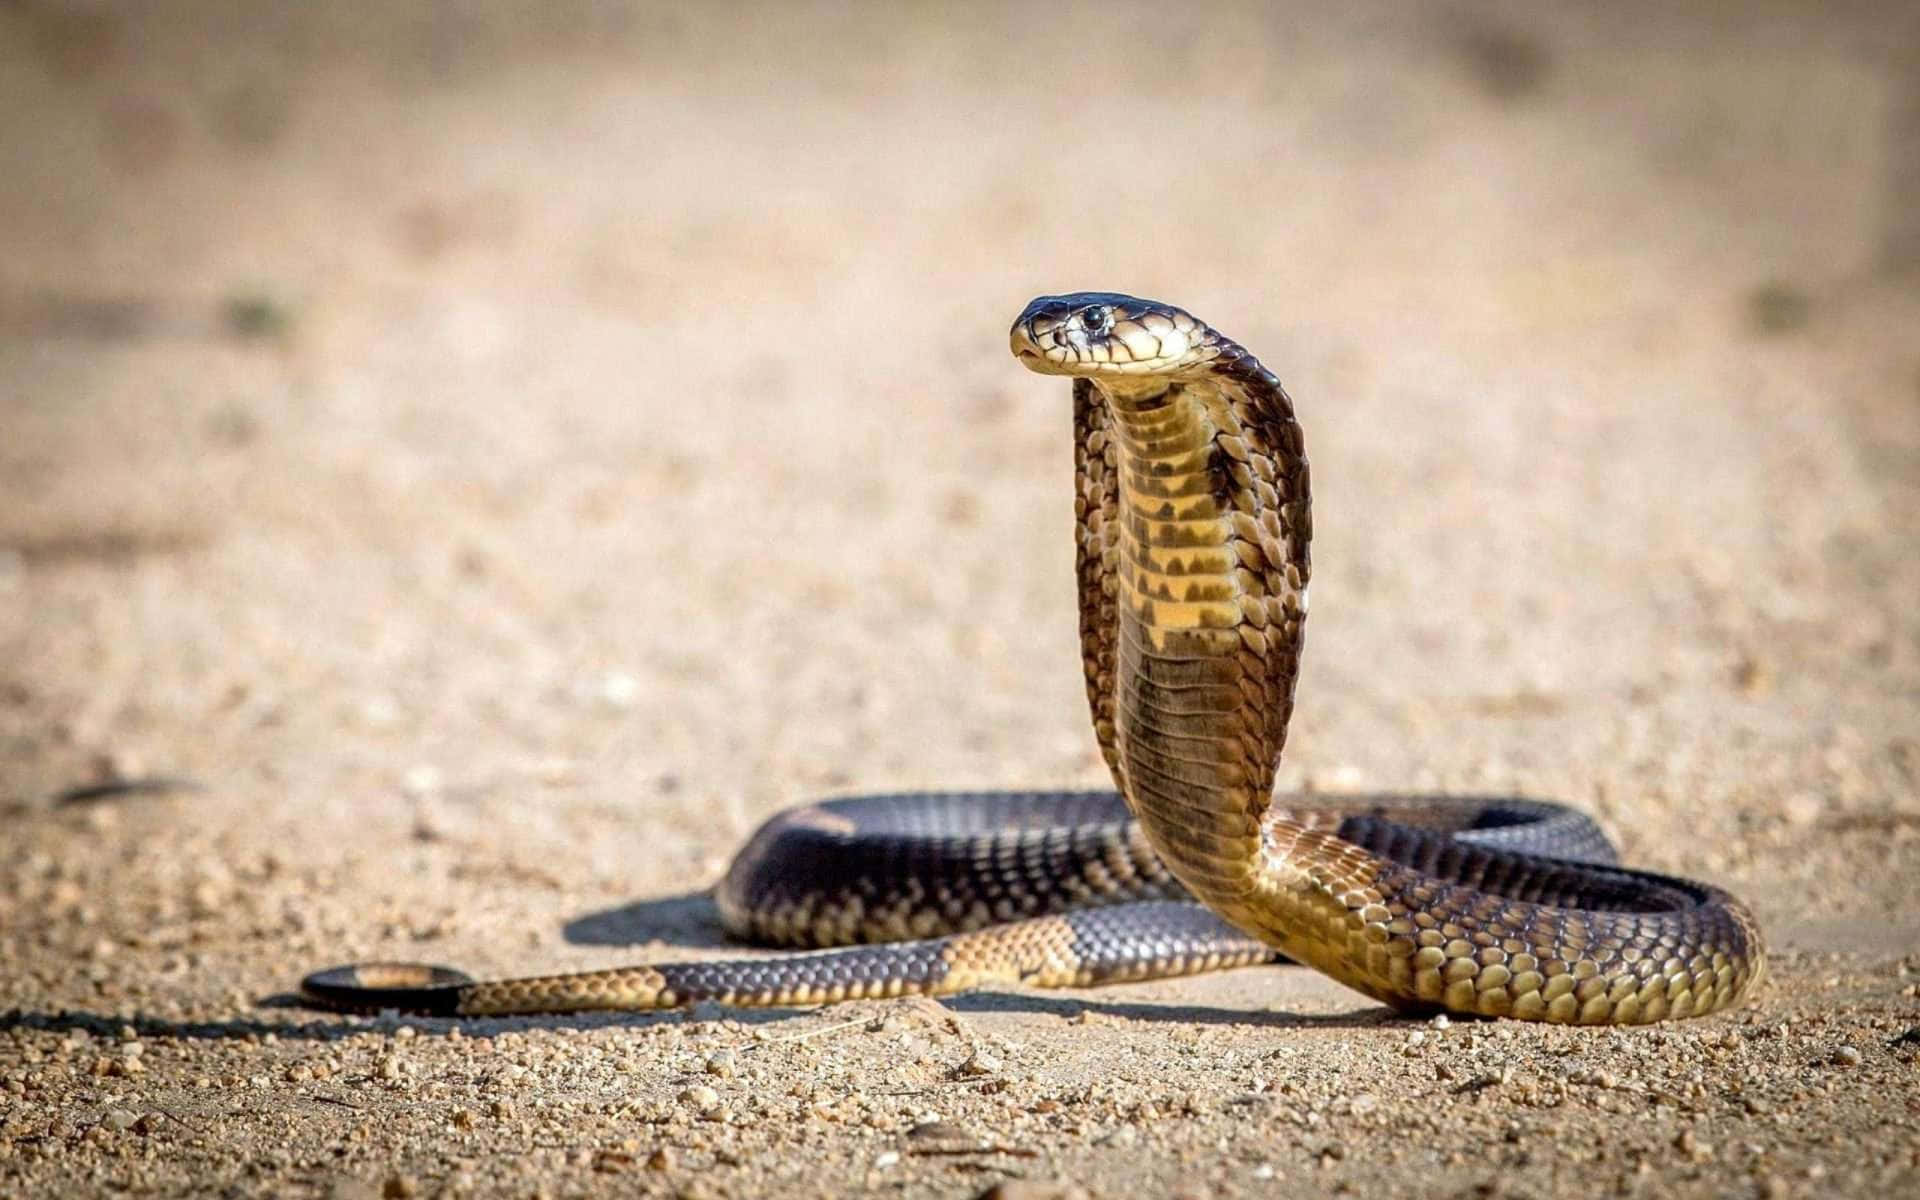 A Startlingly Beautiful Cobra Snaking its Way Through the Grass